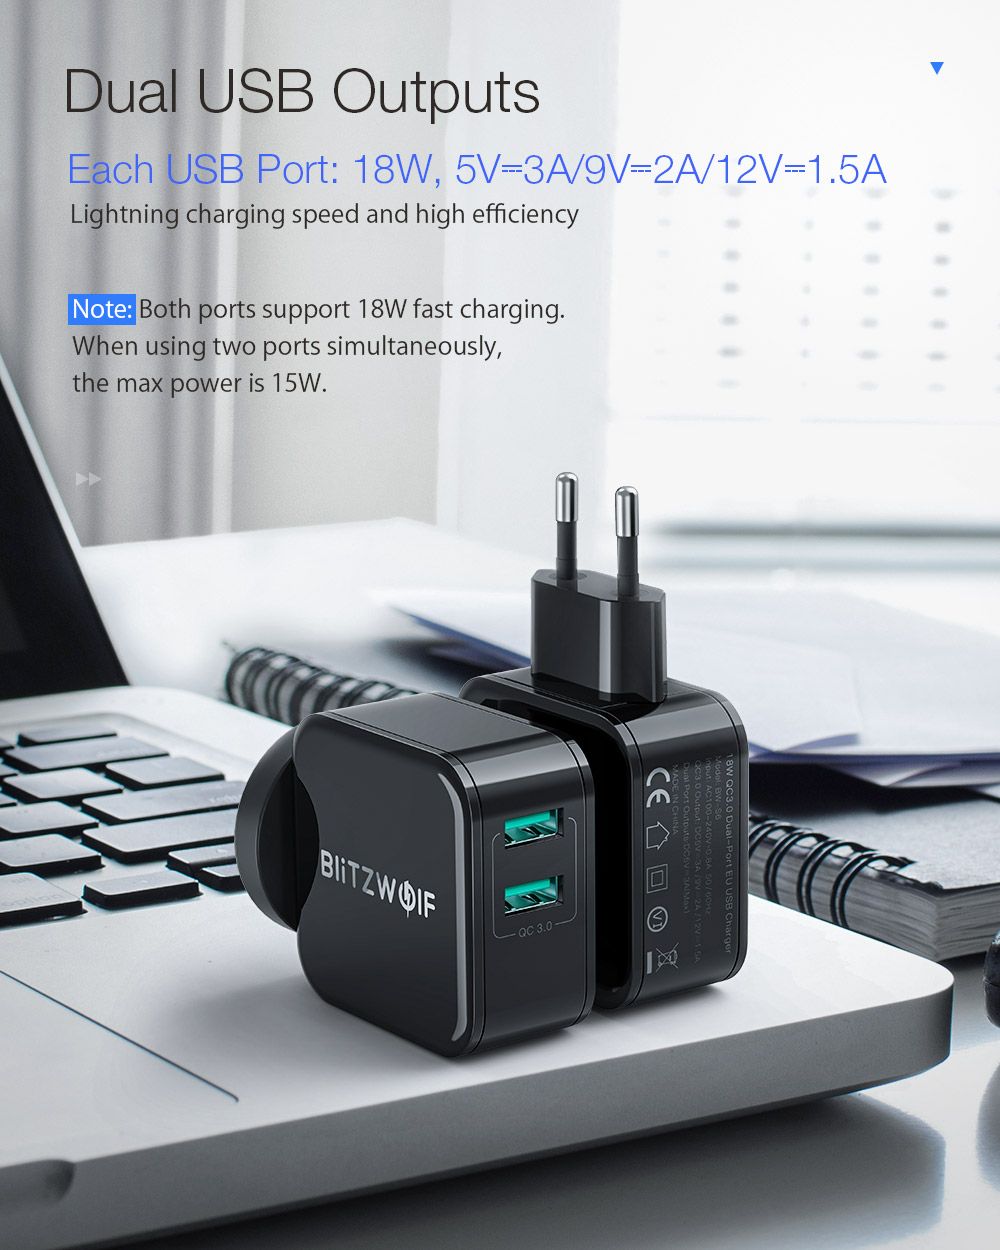 BlitzWolfreg-BW-S6-New-Version-18W-Dual-USB-QC30-Wall-USB-Charger-EU-AU-Adapter-for-iphone-11-Pro-XR-1047935